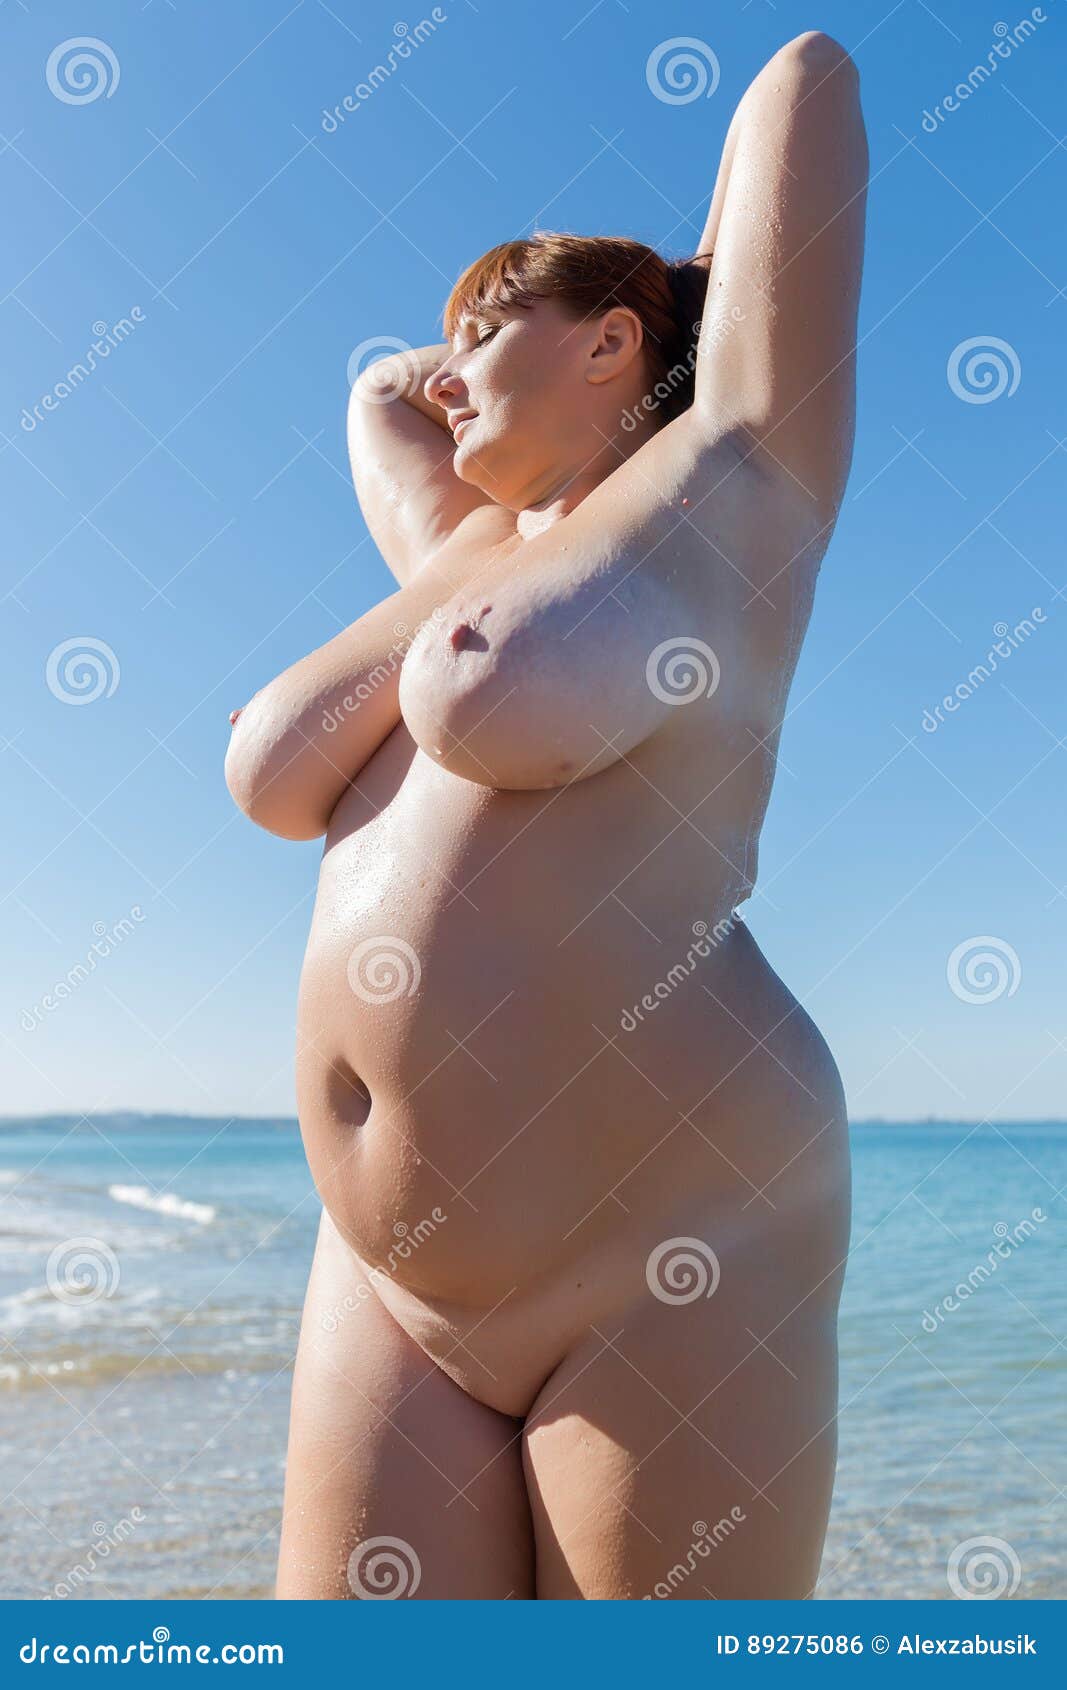 Chubby Wife Naked In The Sea Beach